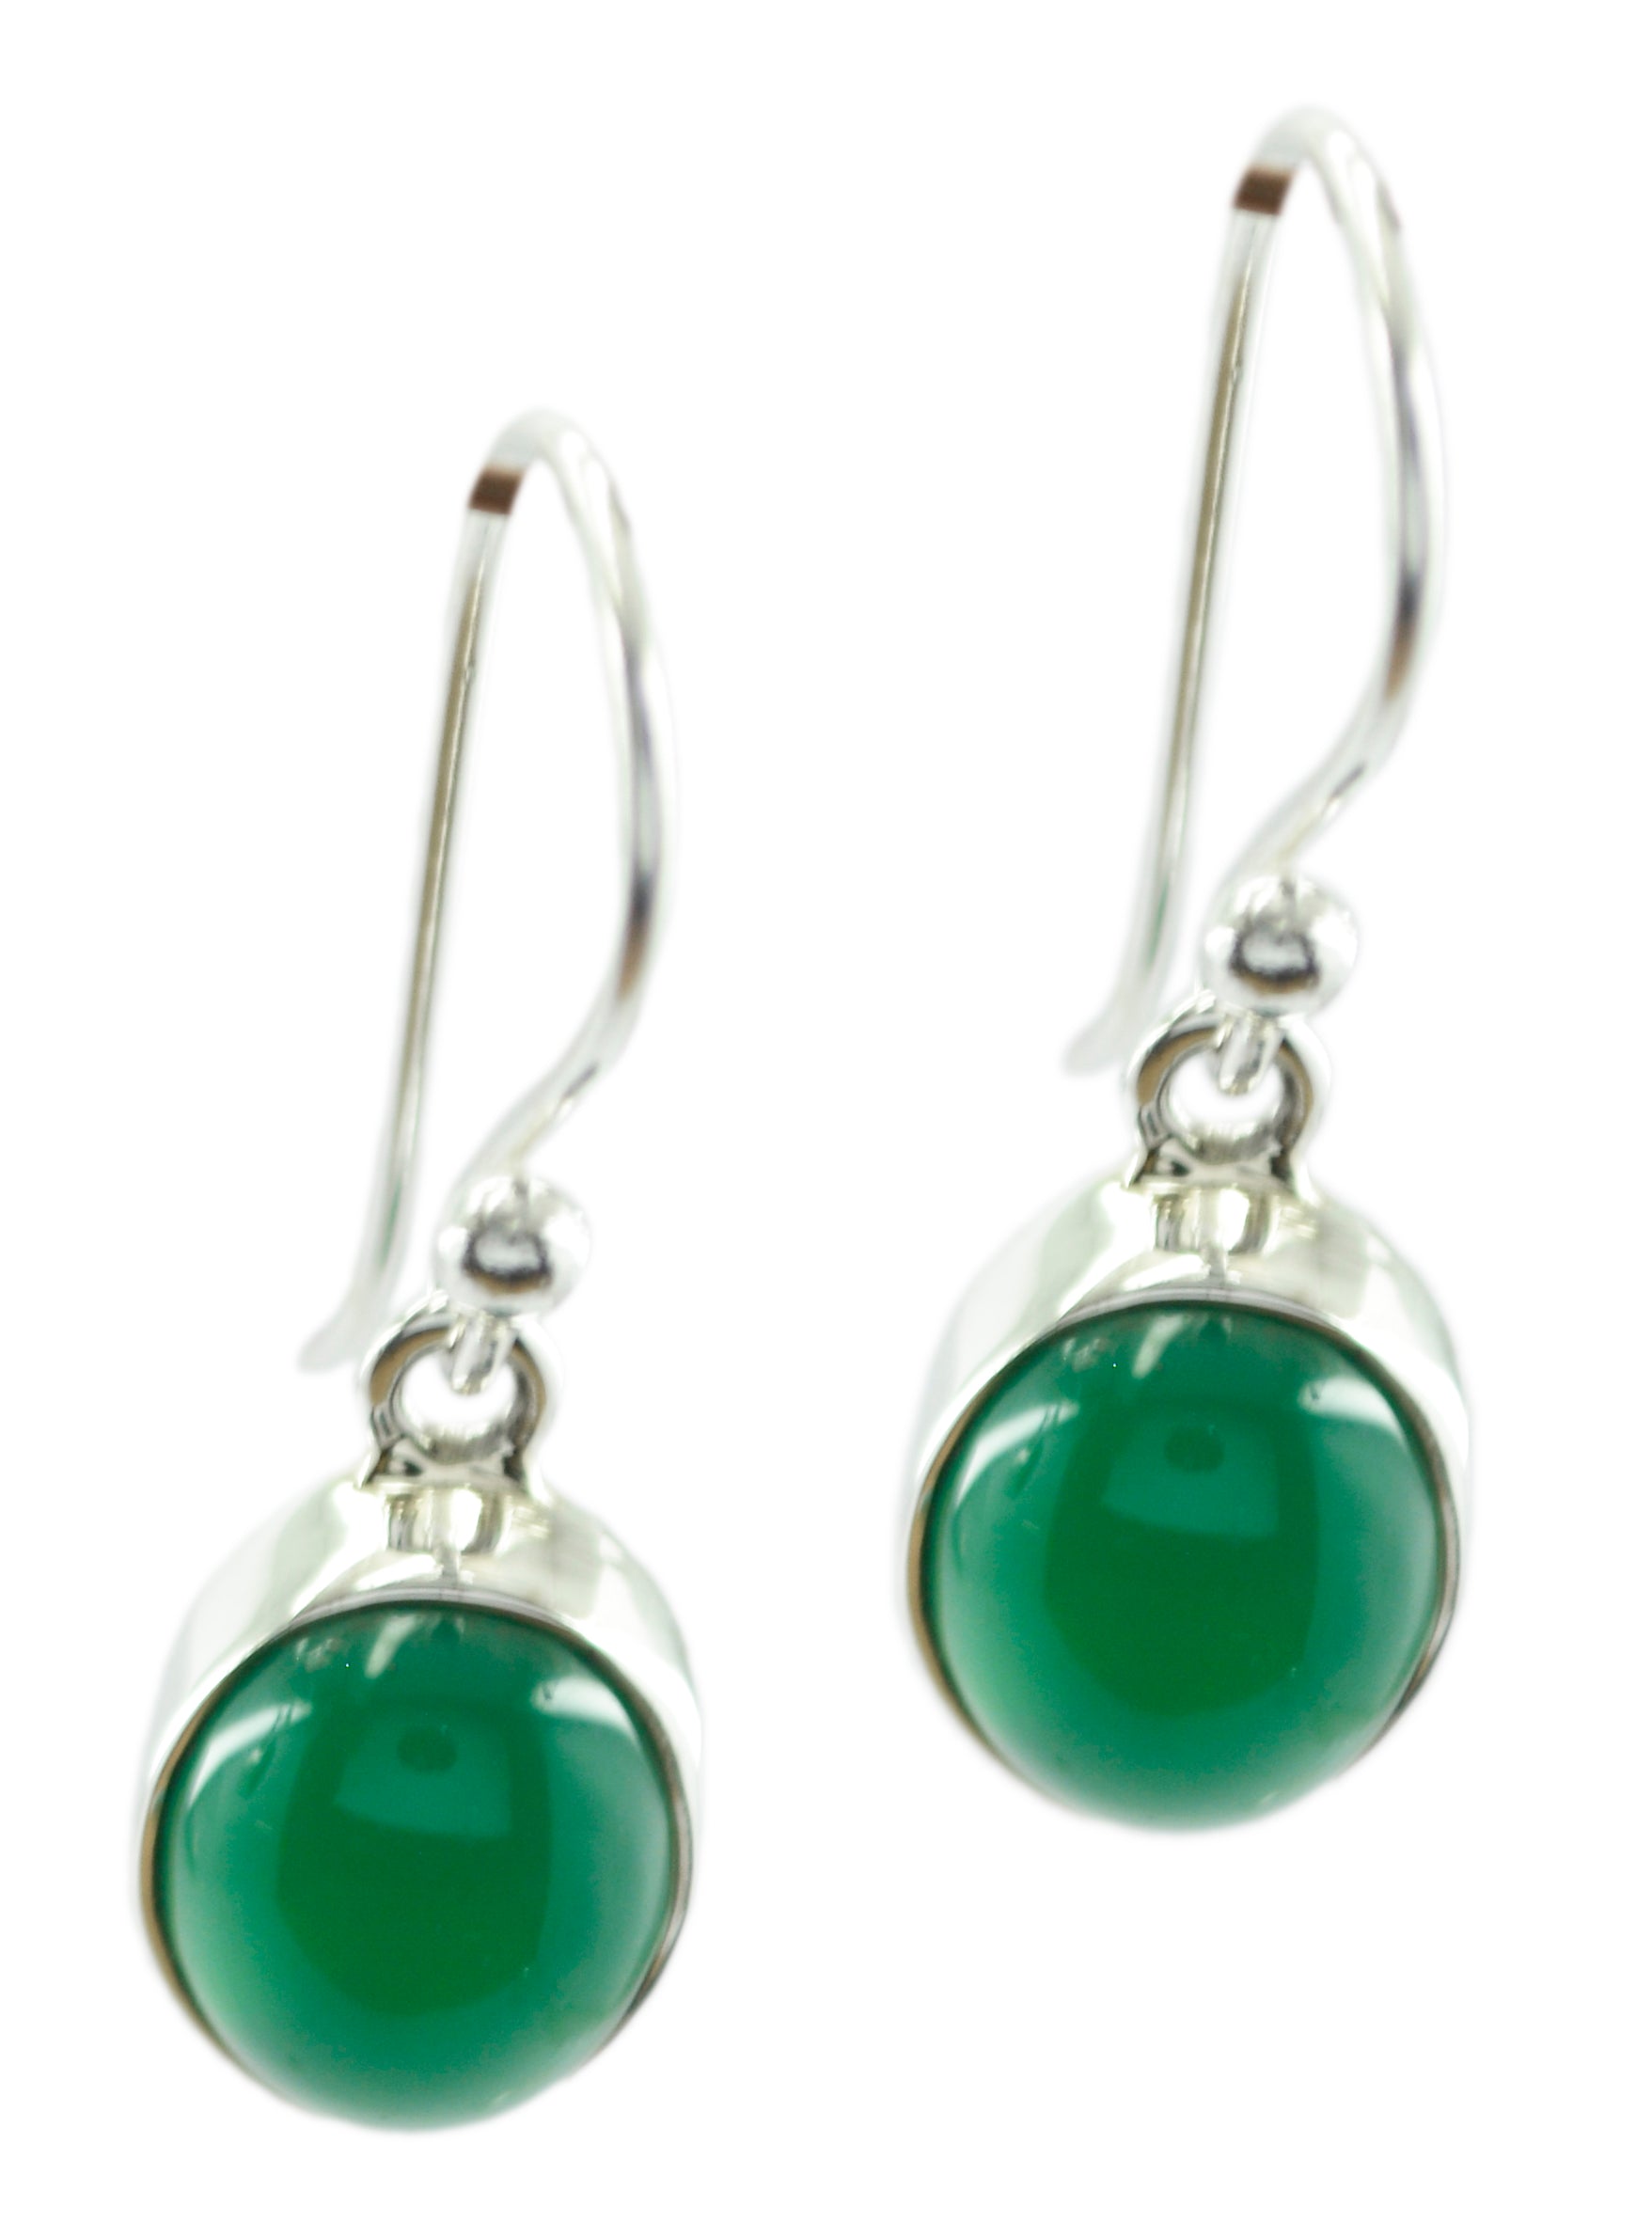 Riyo Nice Gemstone oval Cabochon Green Onyx Silver Earrings gift for good Friday